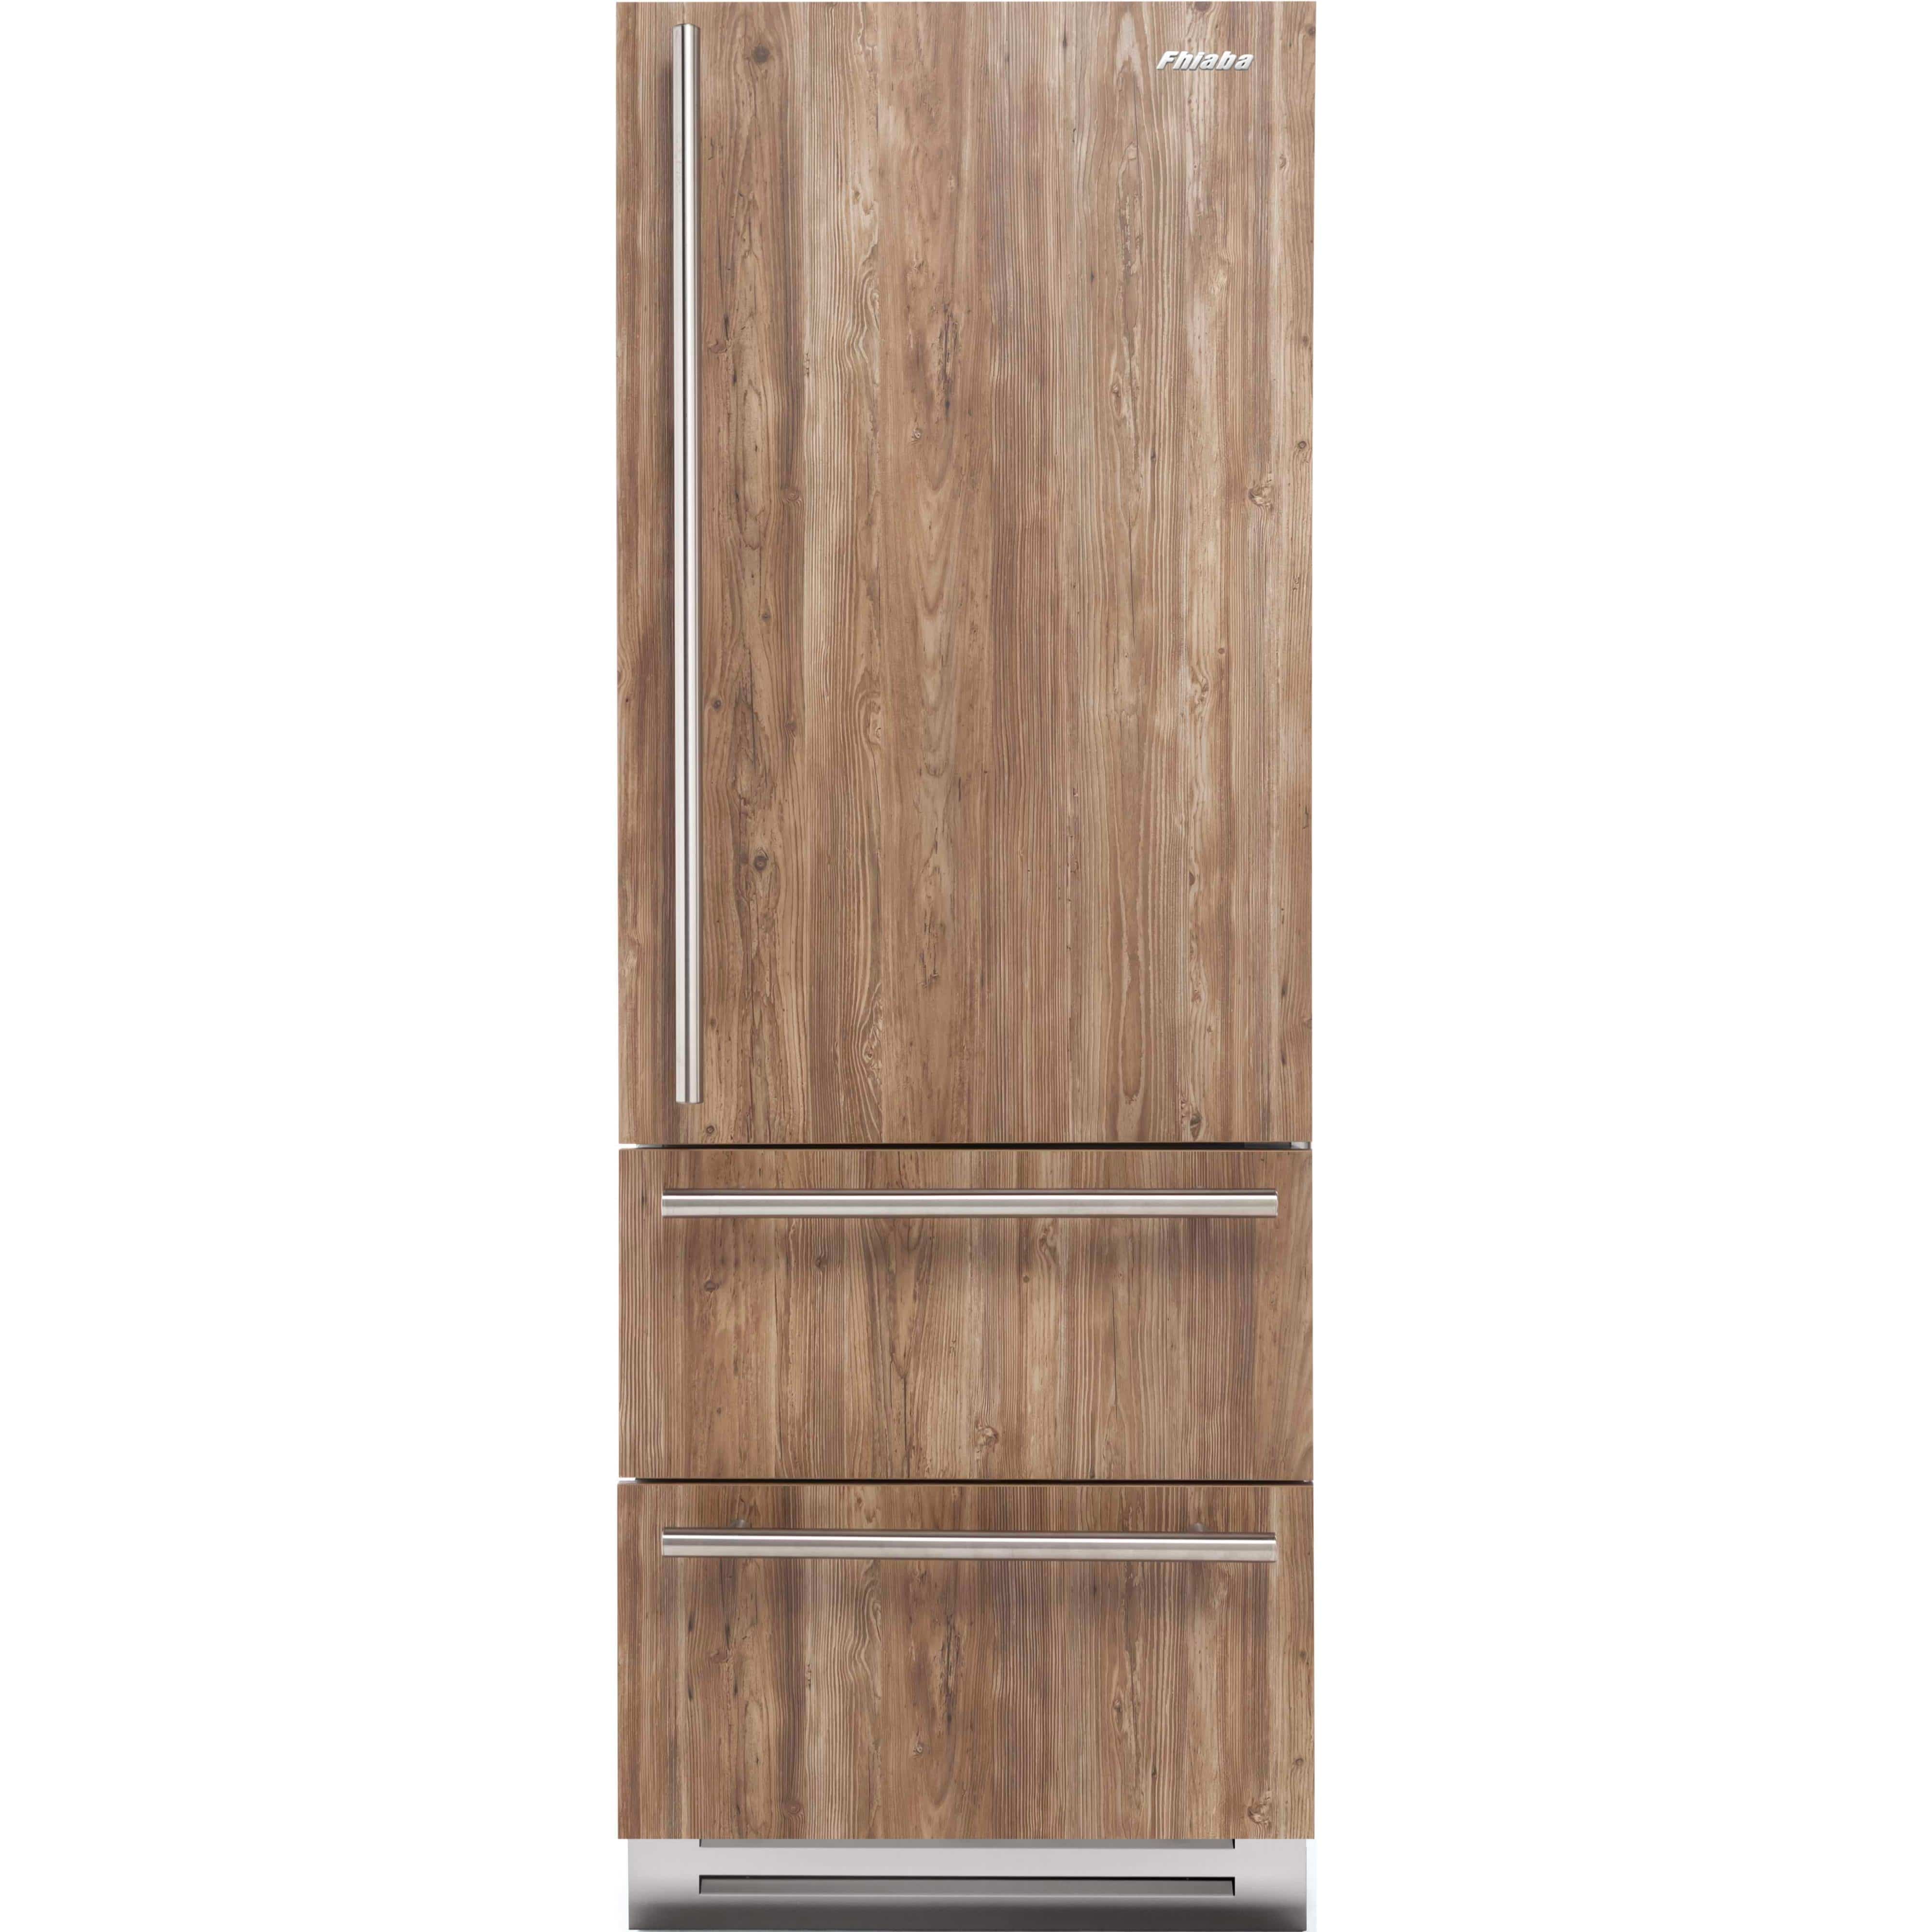 Fhiaba 30-inch Bottom Freezer Refrigerator FI30BDI-RO1 Refrigerators FI30BDIRO1 Luxury Appliances Direct